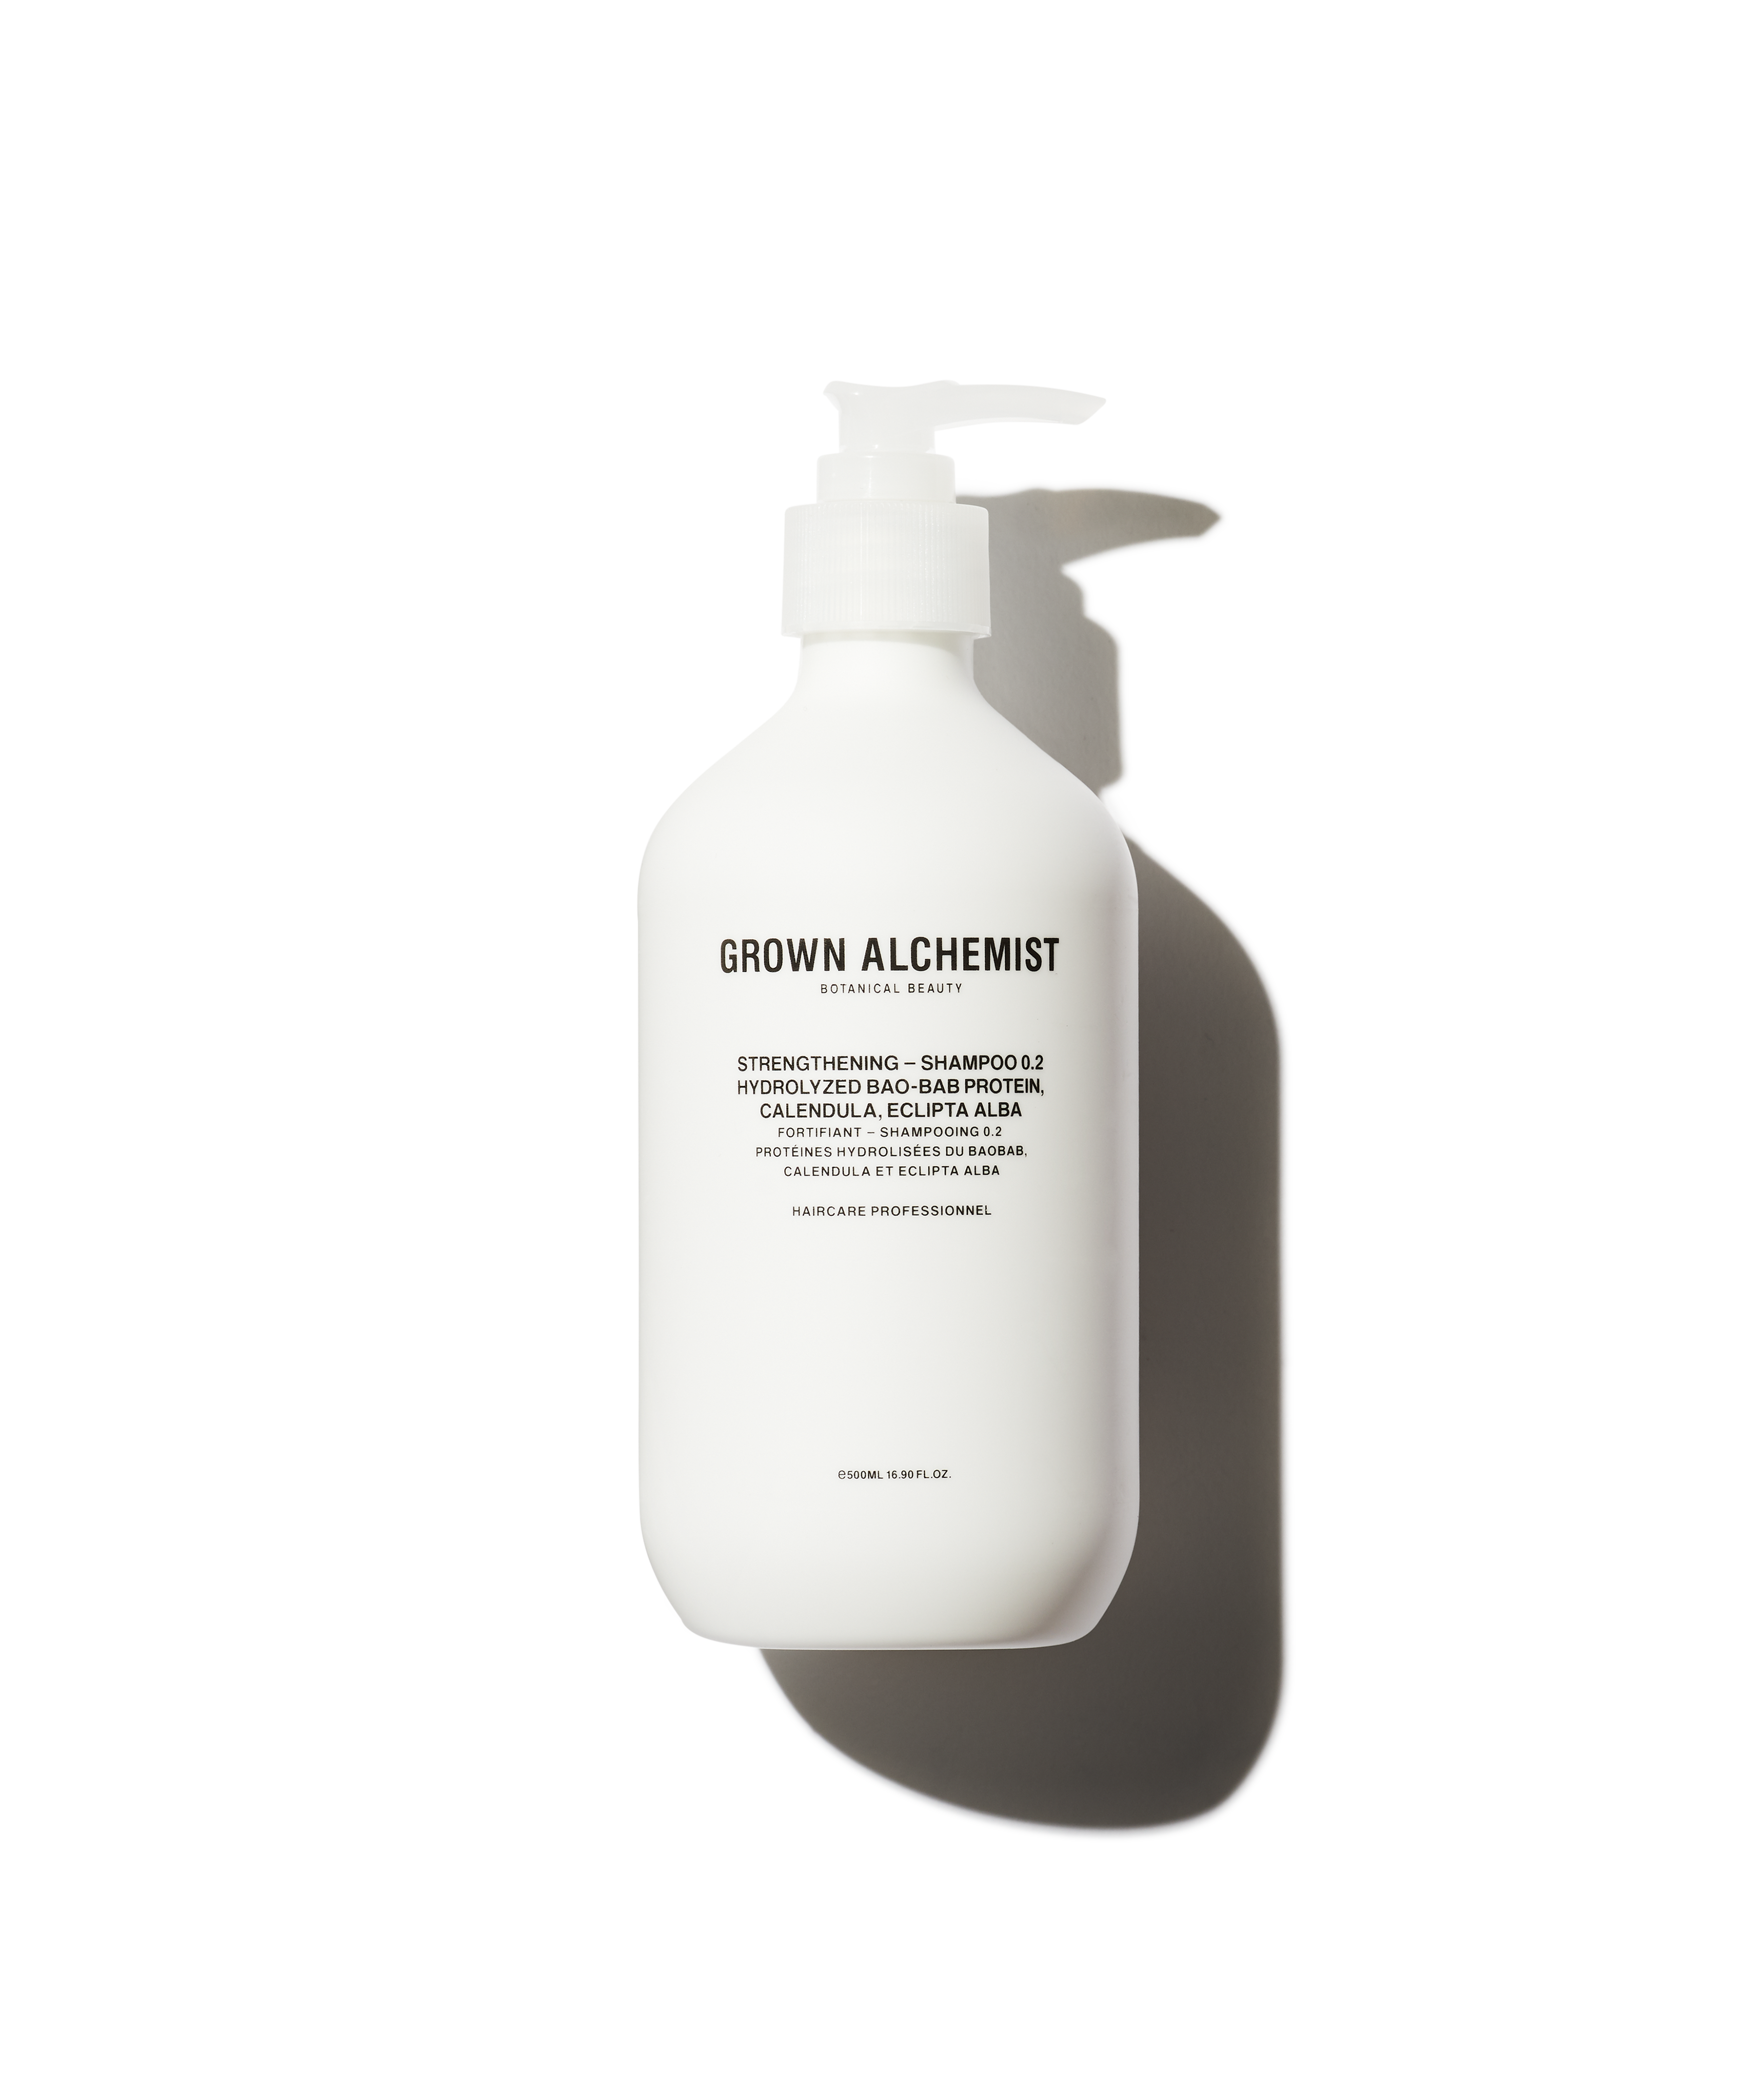 Grown Alchemist Strengthening - Shampoo 0.2 (500 ml)